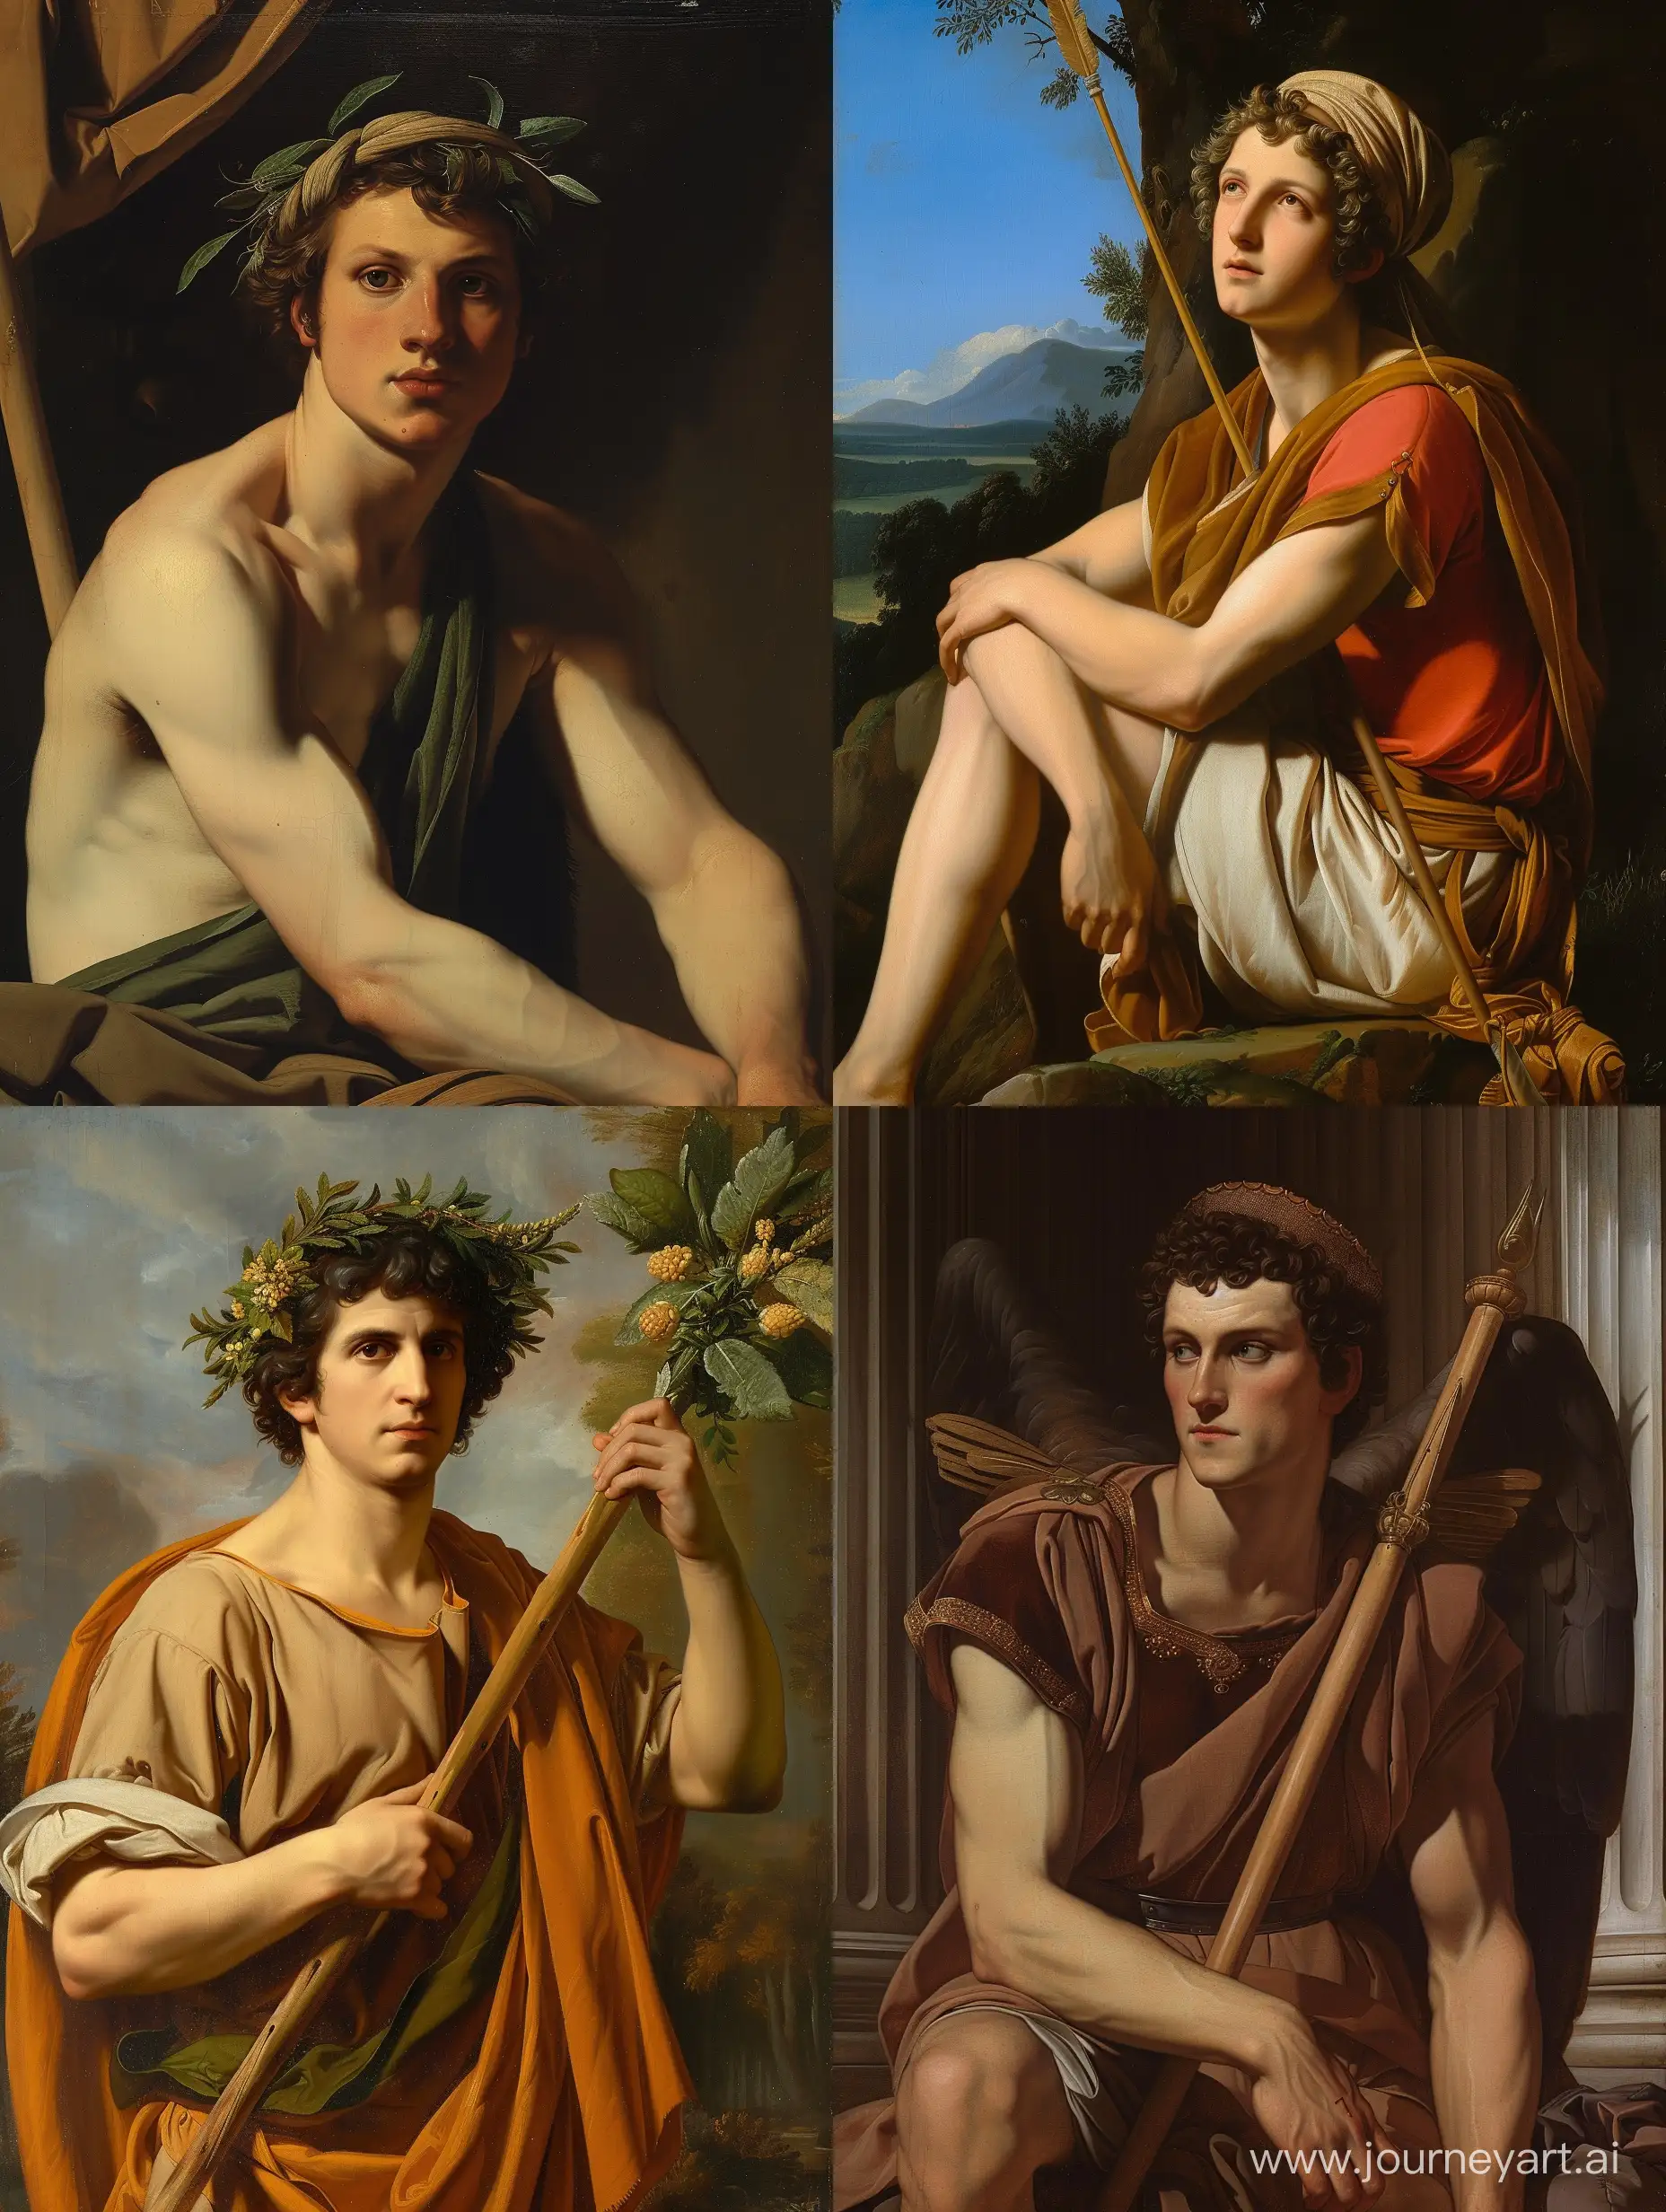 Renaissance-Painting-by-Jacques-Louis-David-Depicting-Classical-Scene-of-Noble-Figures